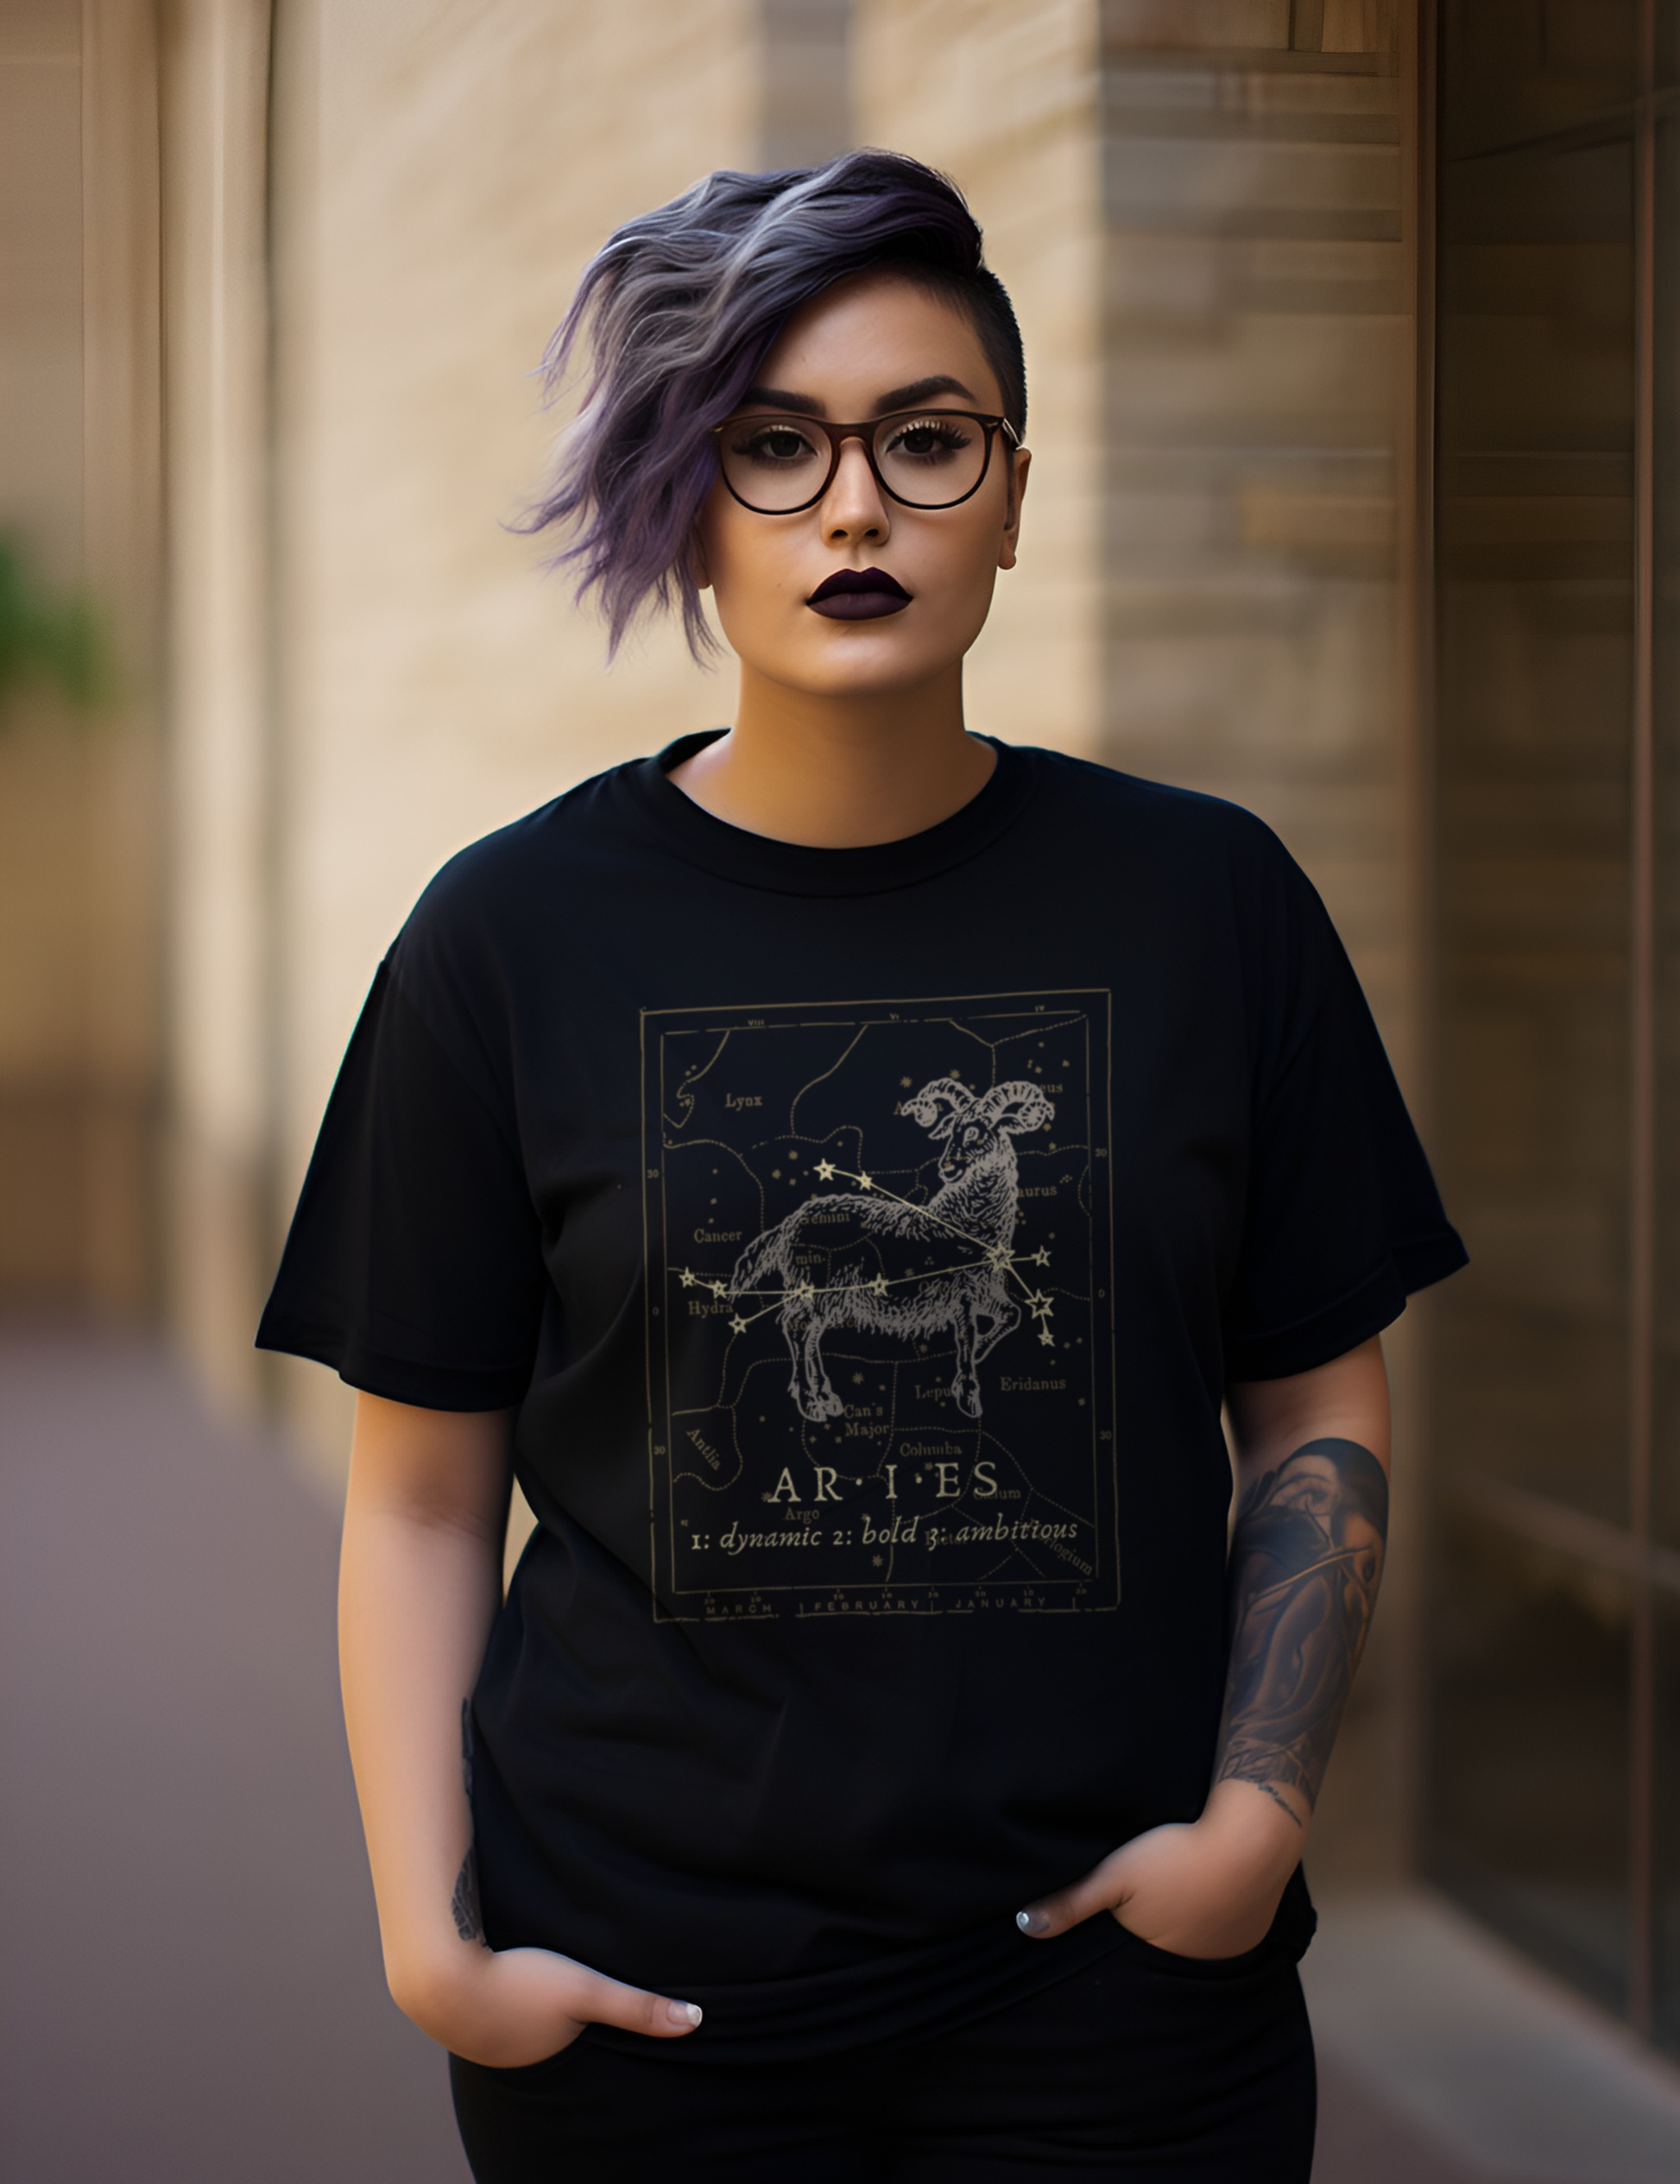 Dark Academia Fashion Aries Zodiac Aesthetic Shirt